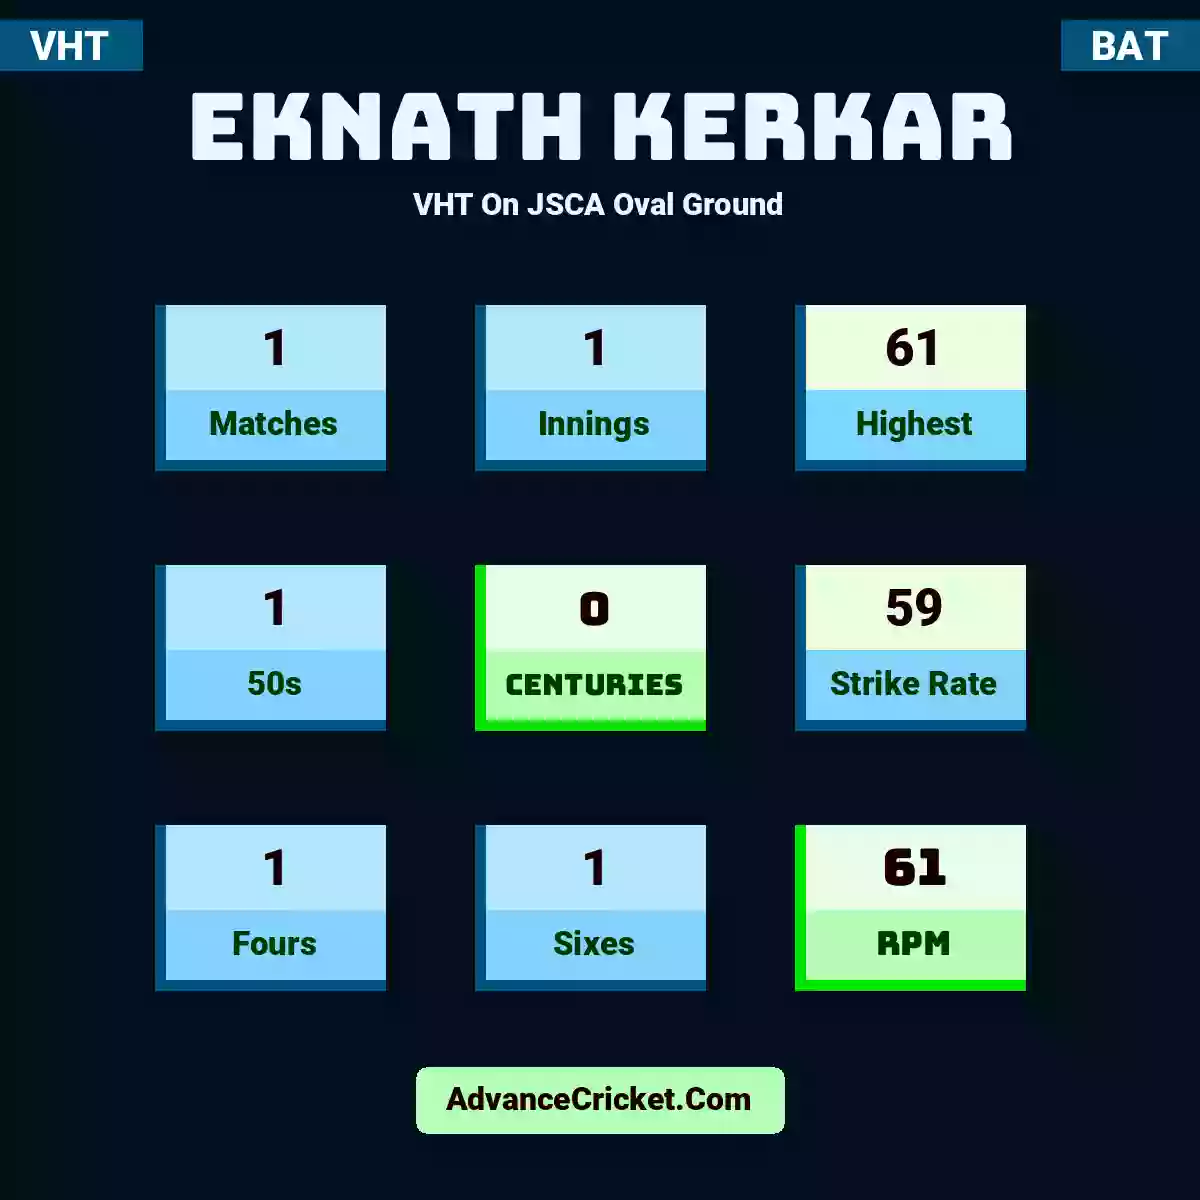 Eknath Kerkar VHT  On JSCA Oval Ground, Eknath Kerkar played 1 matches, scored 61 runs as highest, 1 half-centuries, and 0 centuries, with a strike rate of 59. E.Kerkar hit 1 fours and 1 sixes, with an RPM of 61.